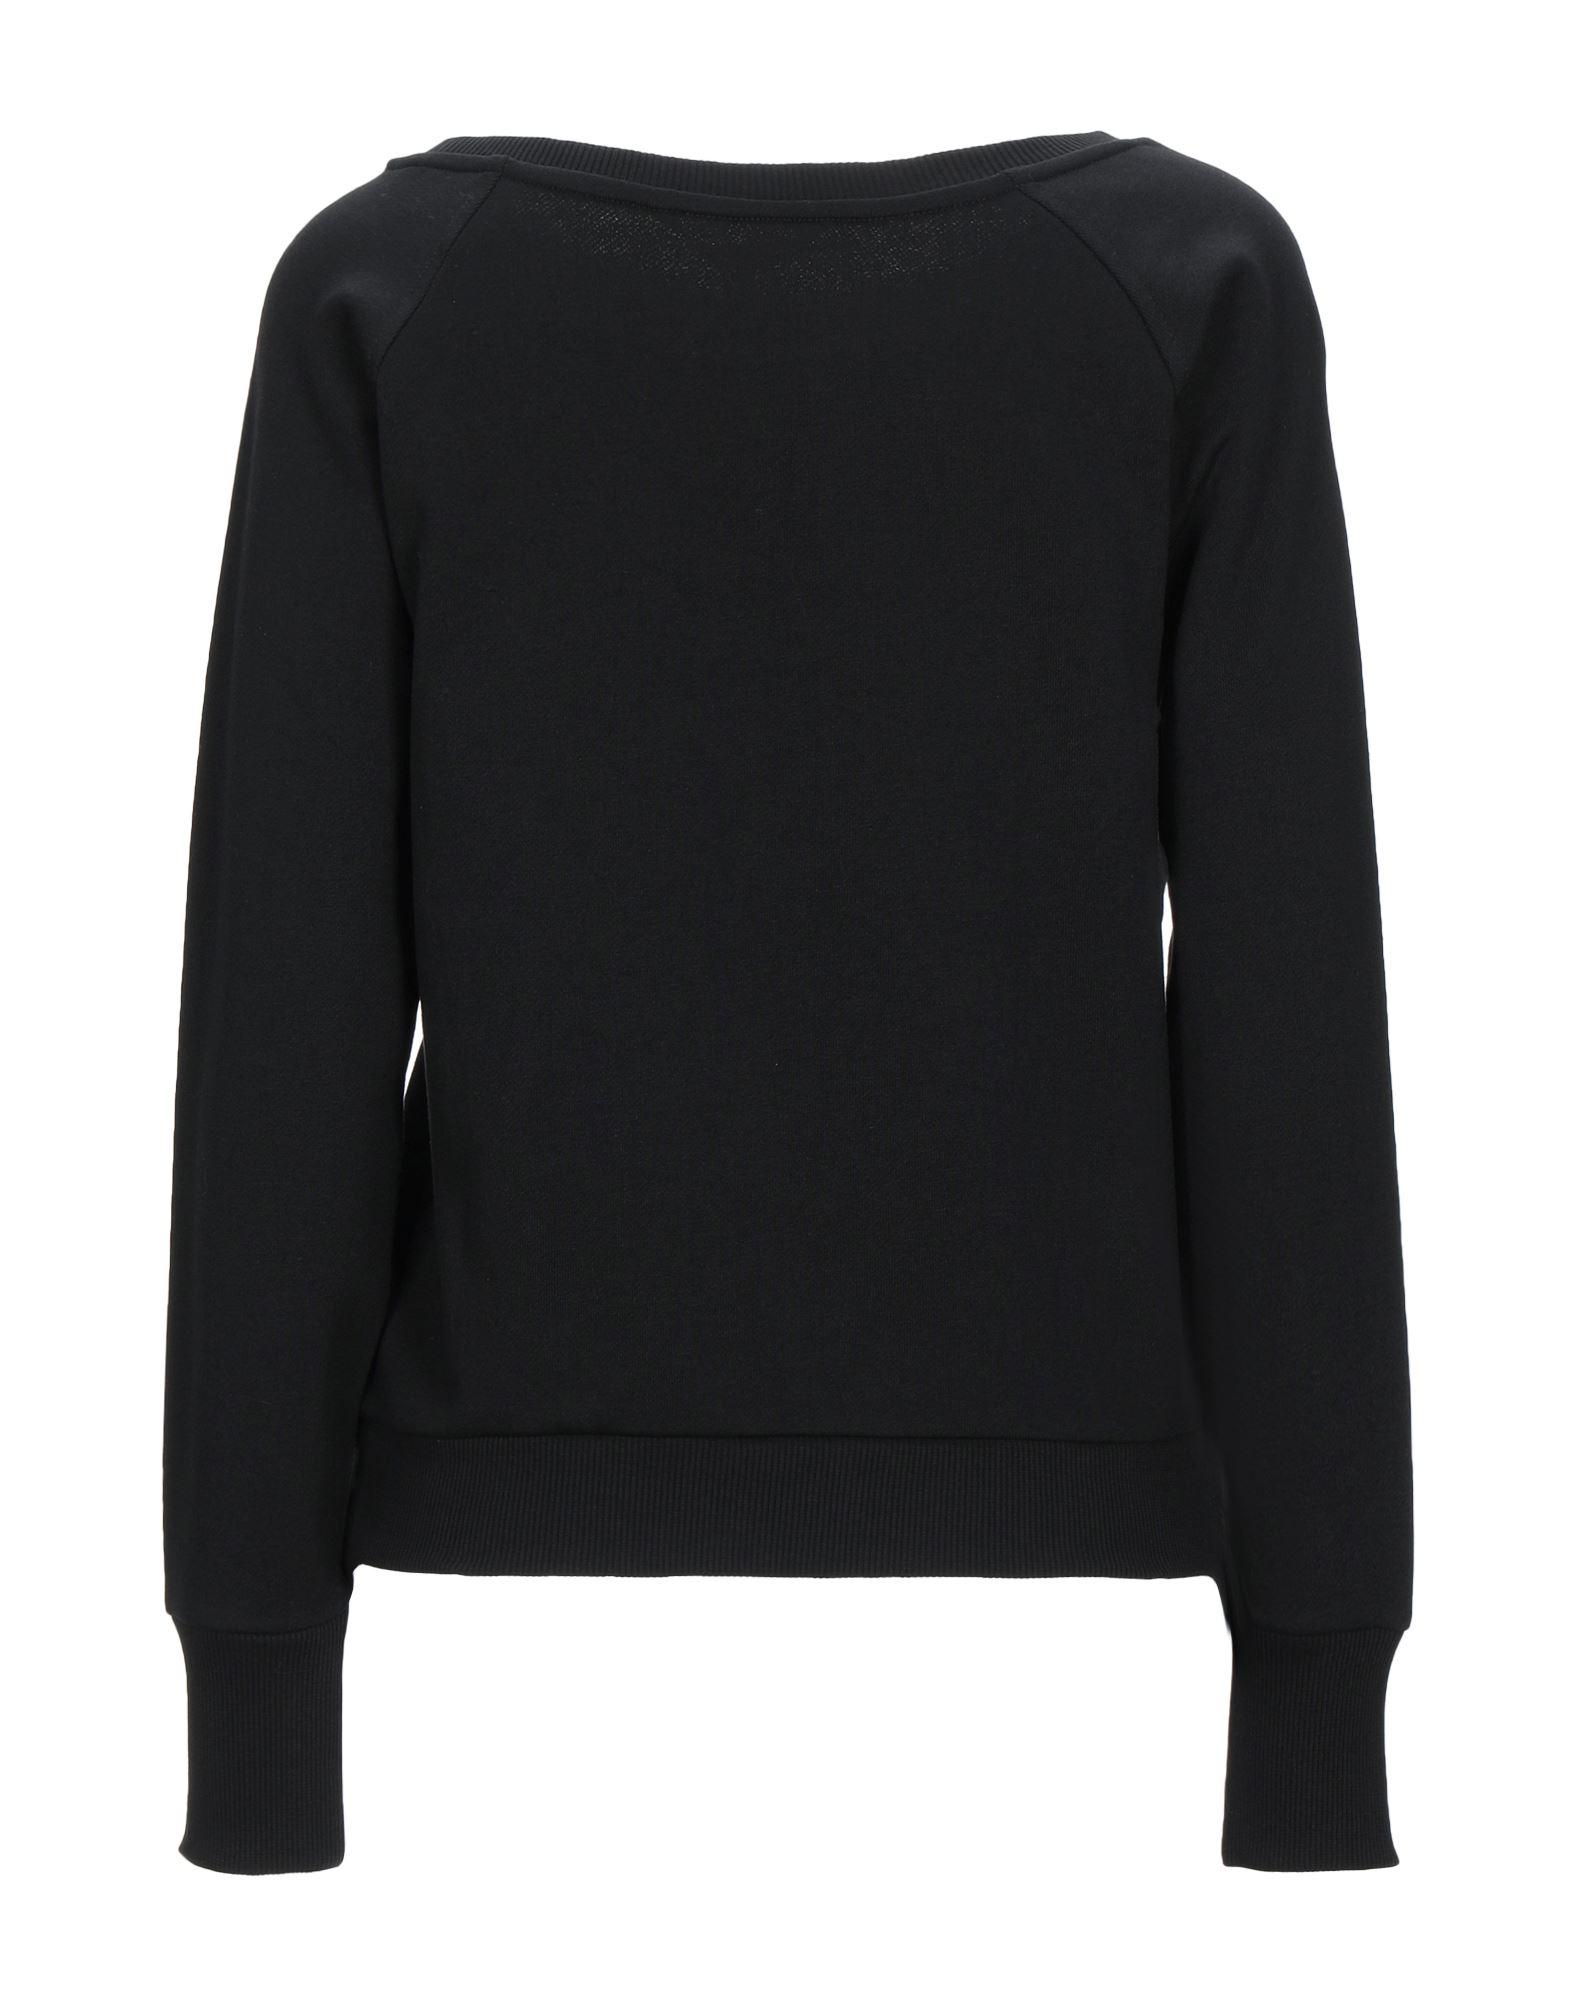 Armani Exchange Cotton Sweatshirt in Black - Lyst